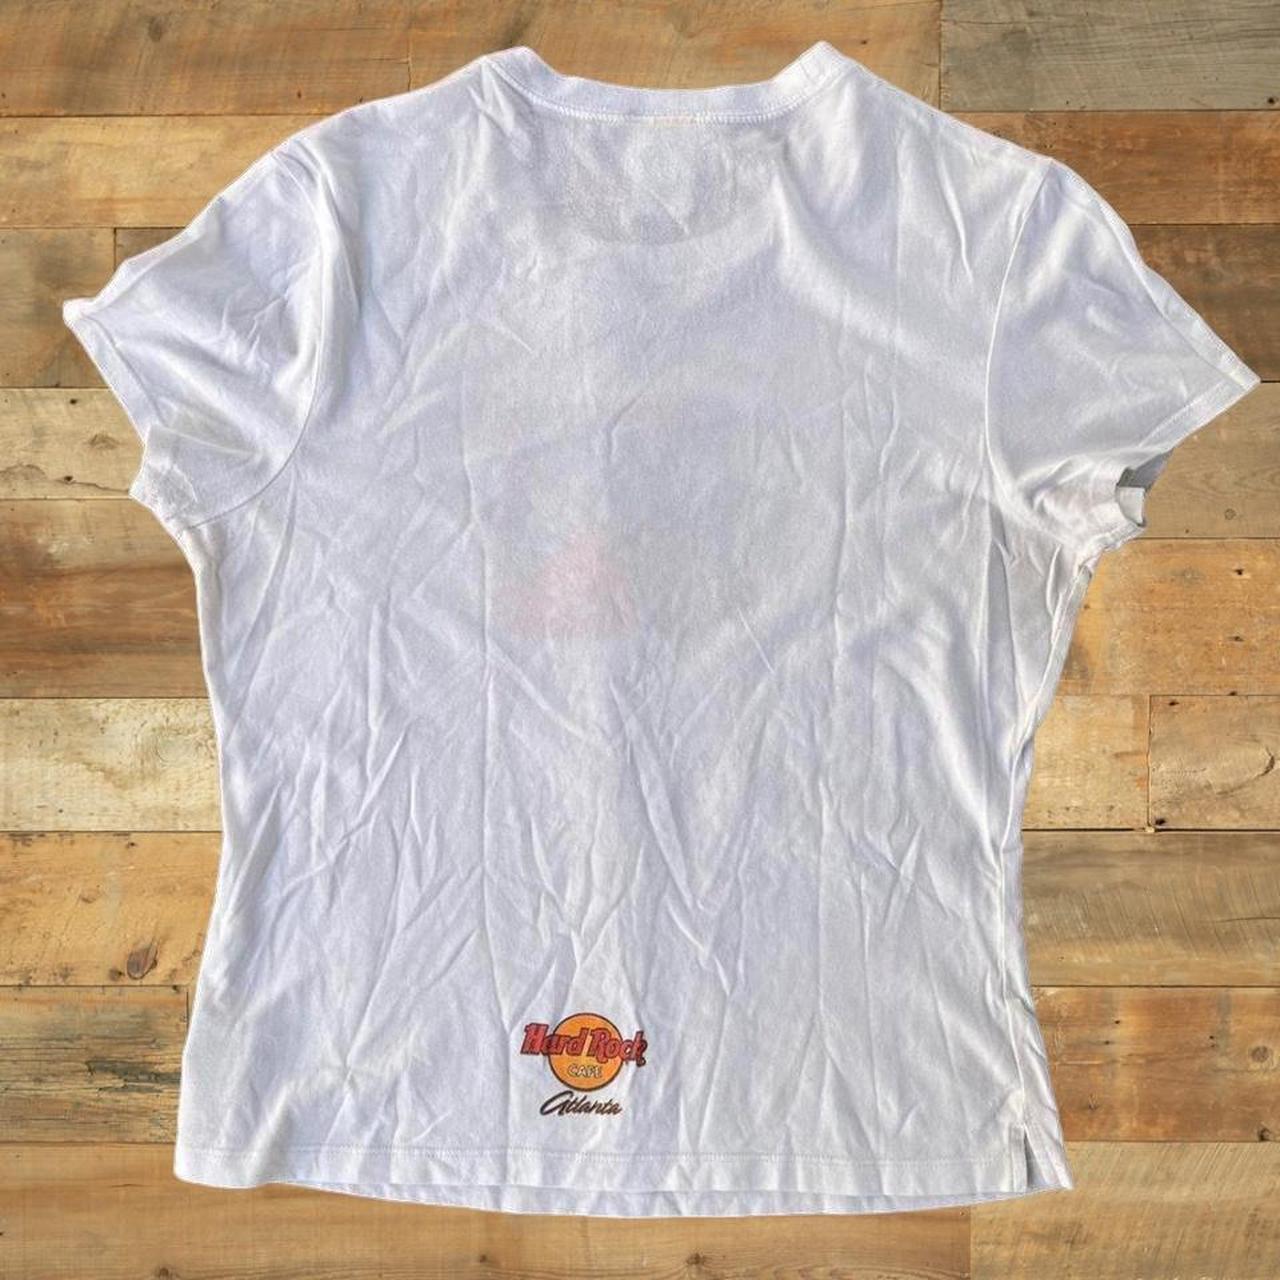 Hard Rock Cafe Women's White and Orange T-shirt (2)